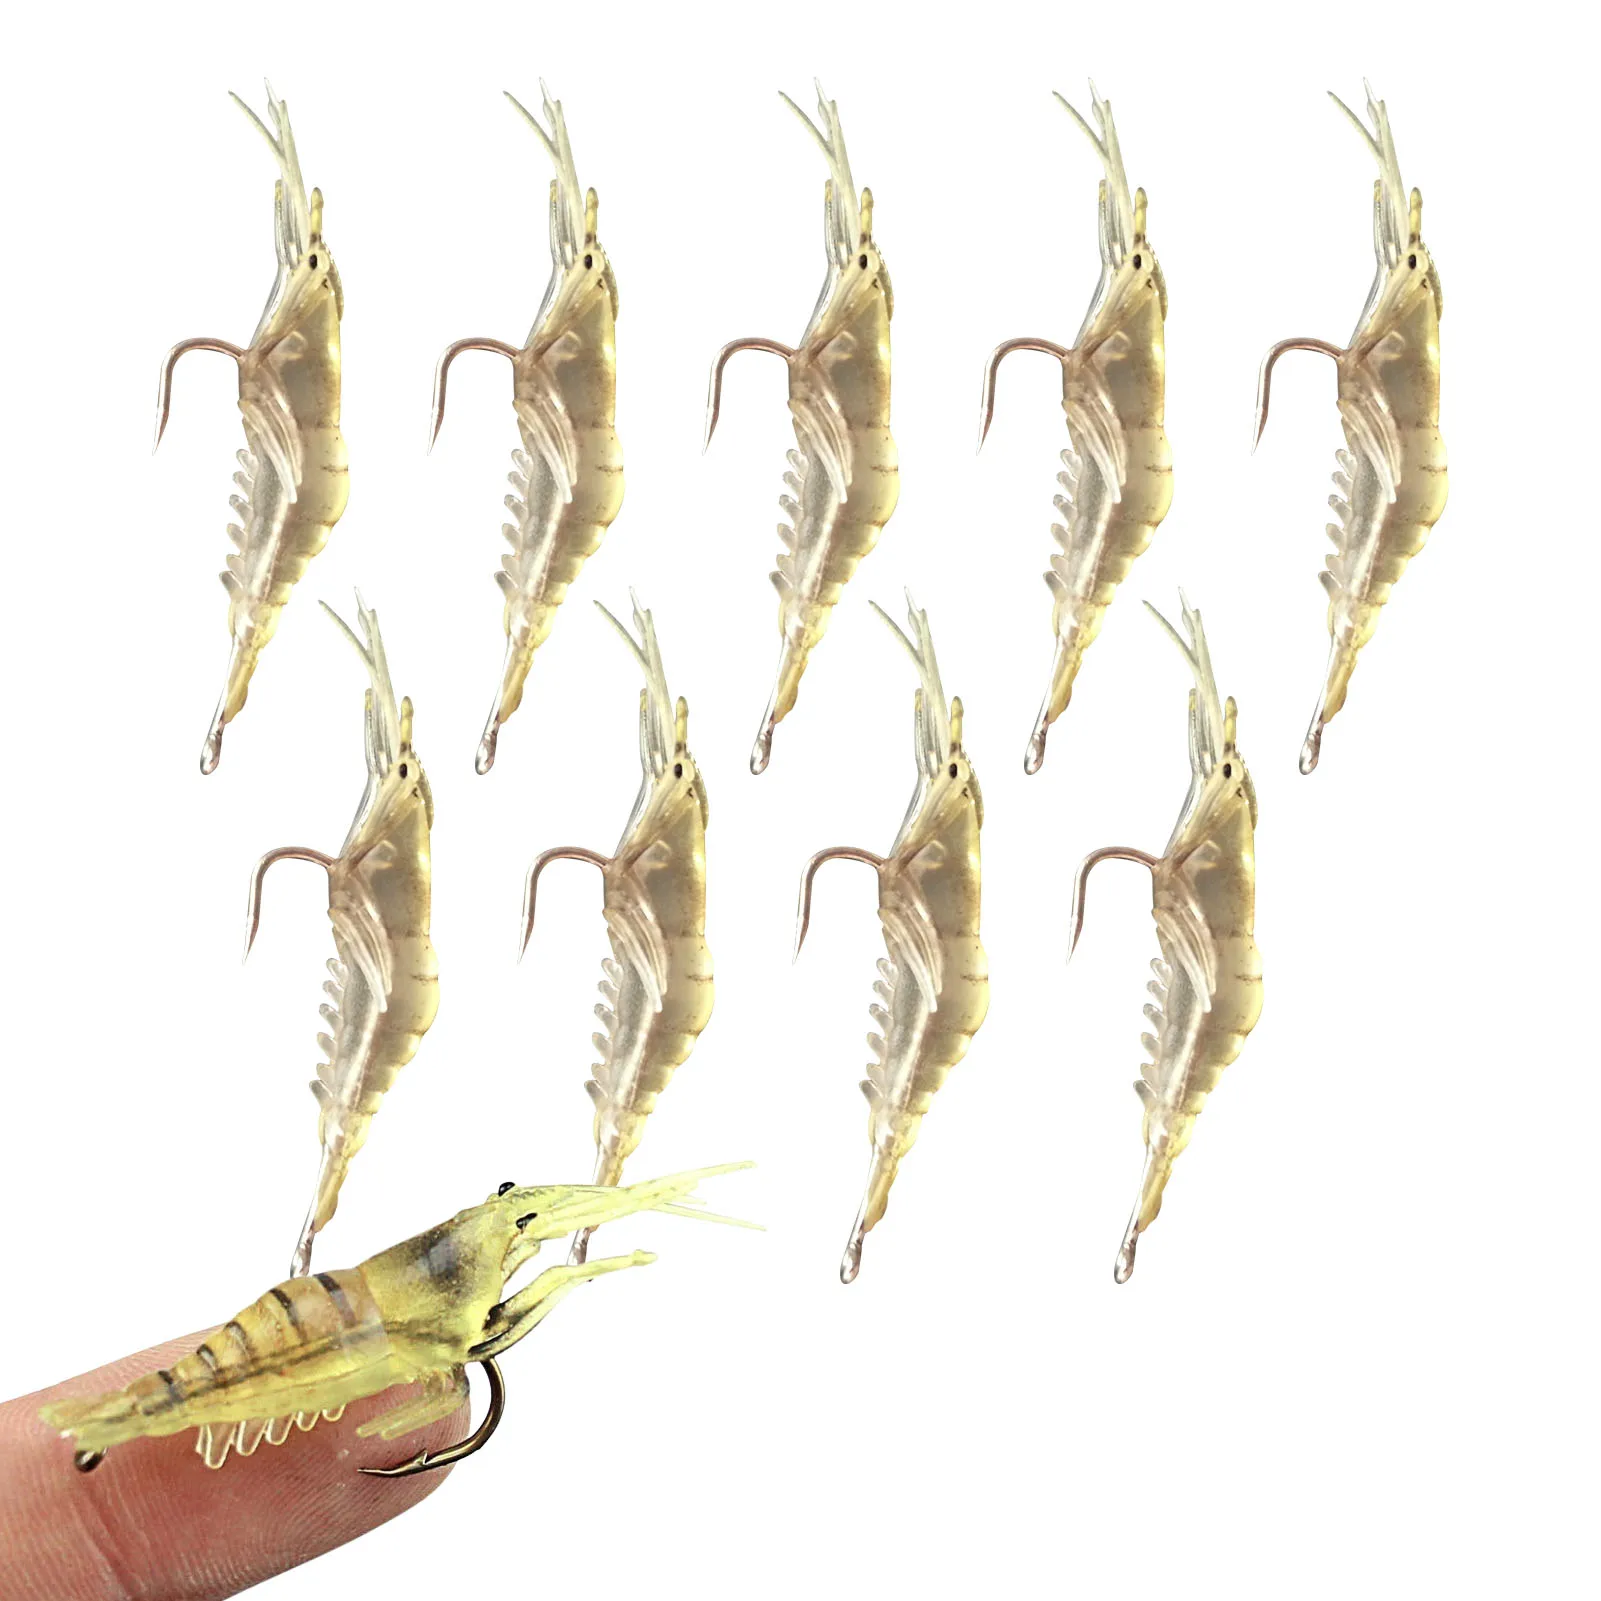 

10pcs Isca Artificial Soft Shrimp Lure Worm For Fishing Bait 1.4g/4cm Hook Sharp Crankbait Lures Silicone Shone Prawn Bait Pesca